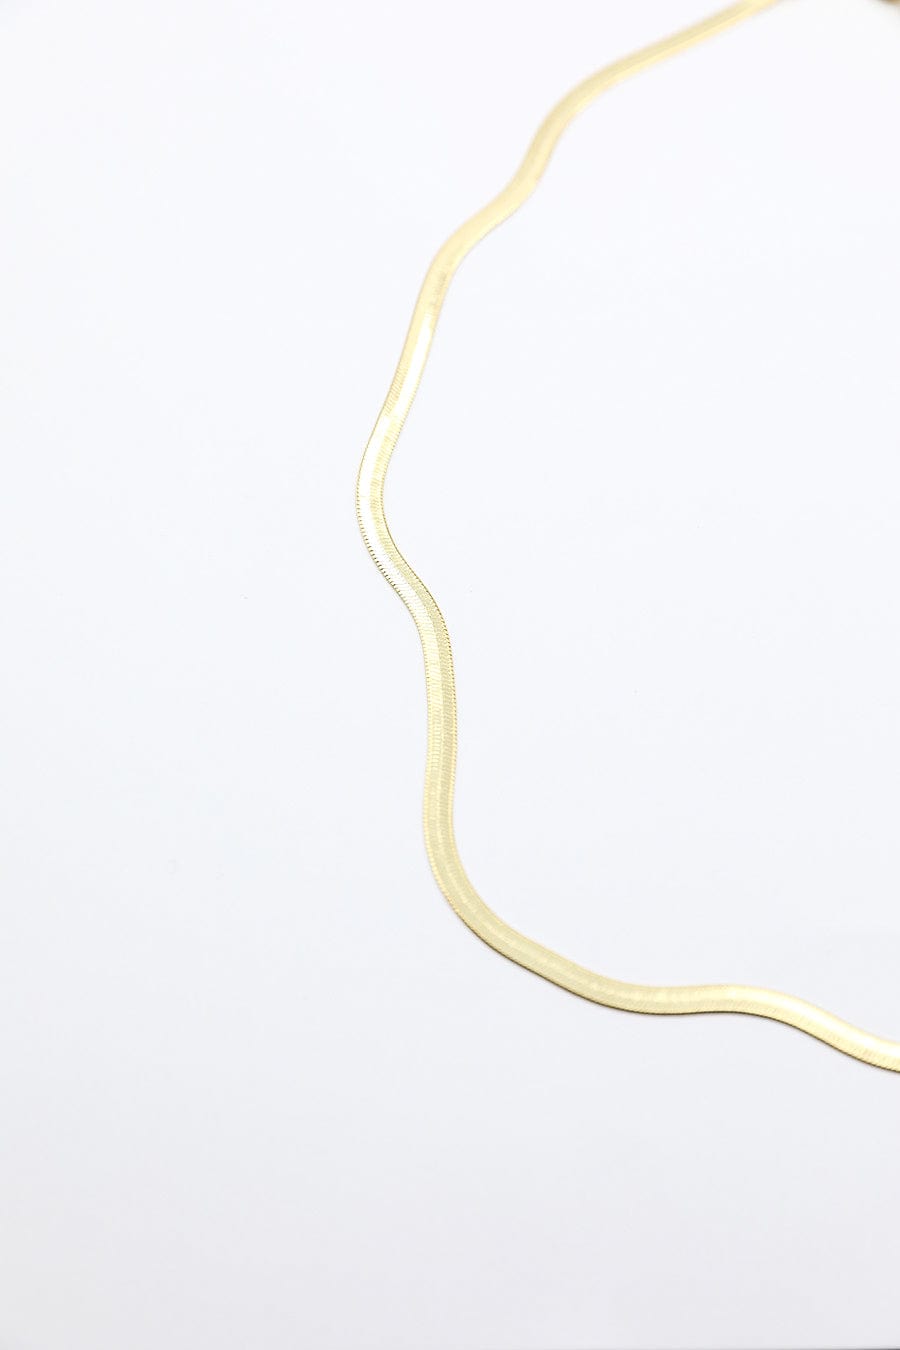 Snake Chain Single Strand Necklace